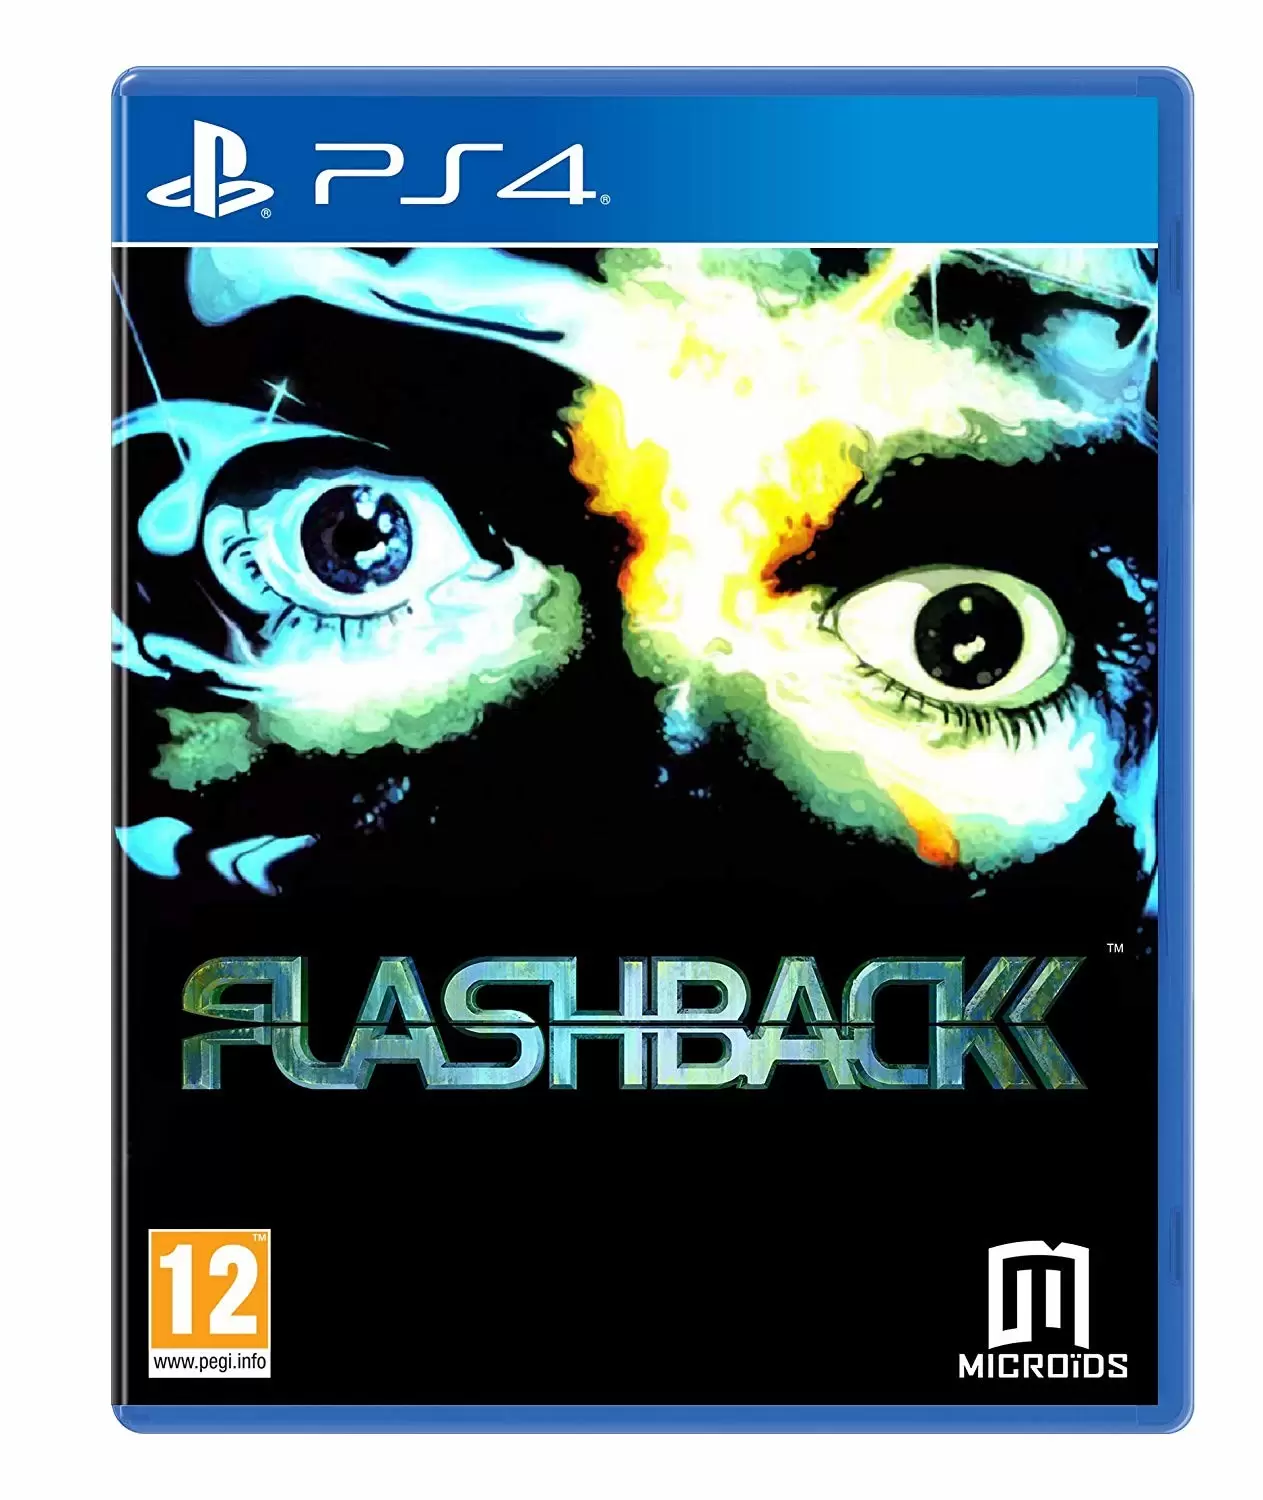 PS4 Games - Flashback 25th Anniversary